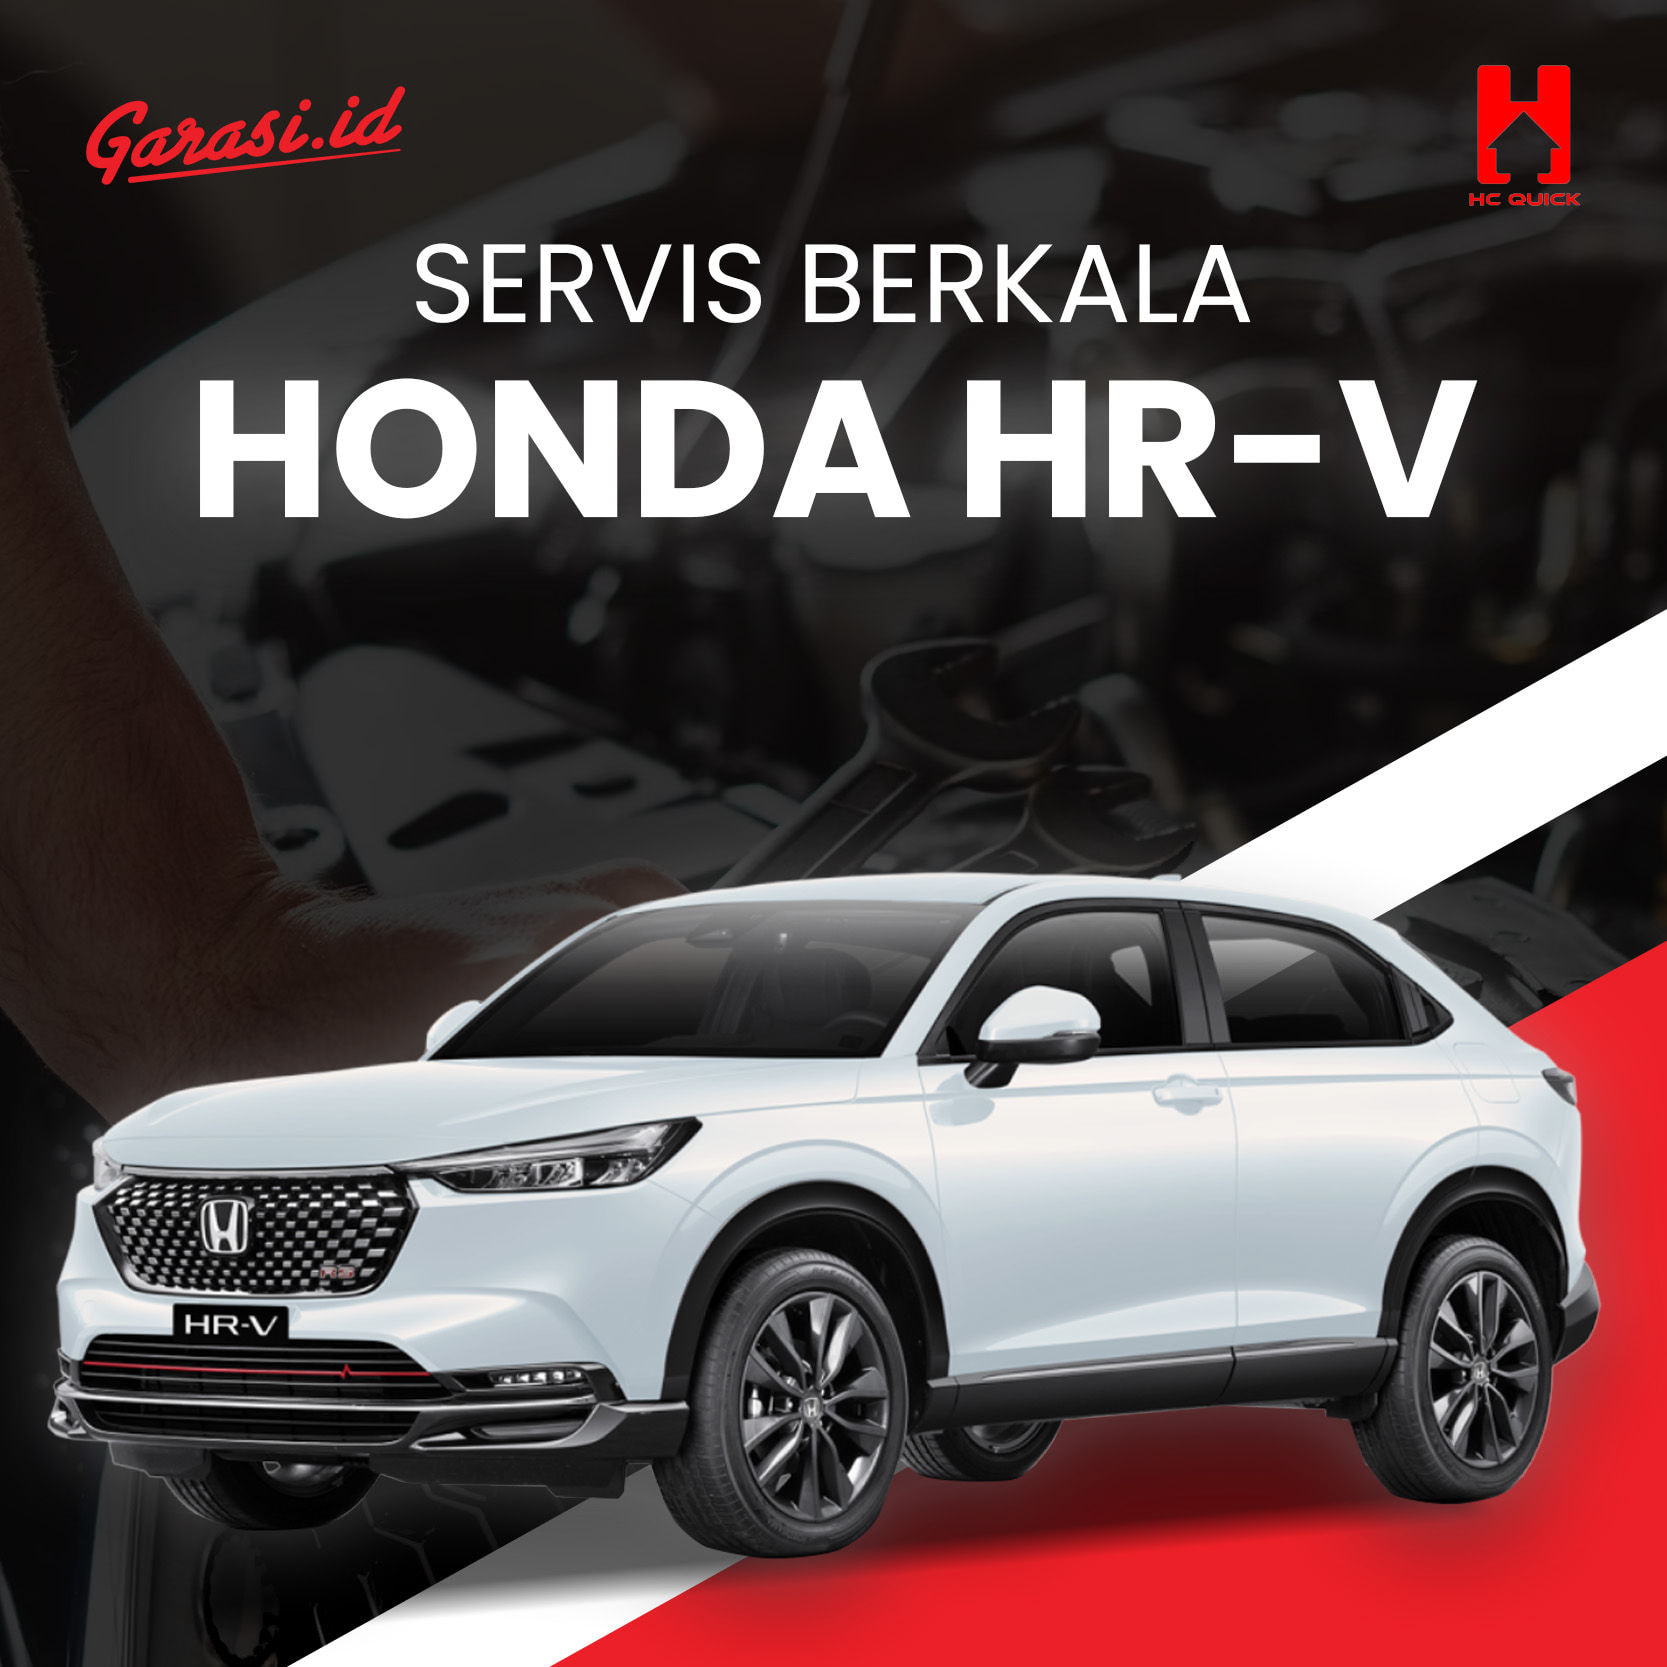 Paket perawatan service berkala Honda HR-V